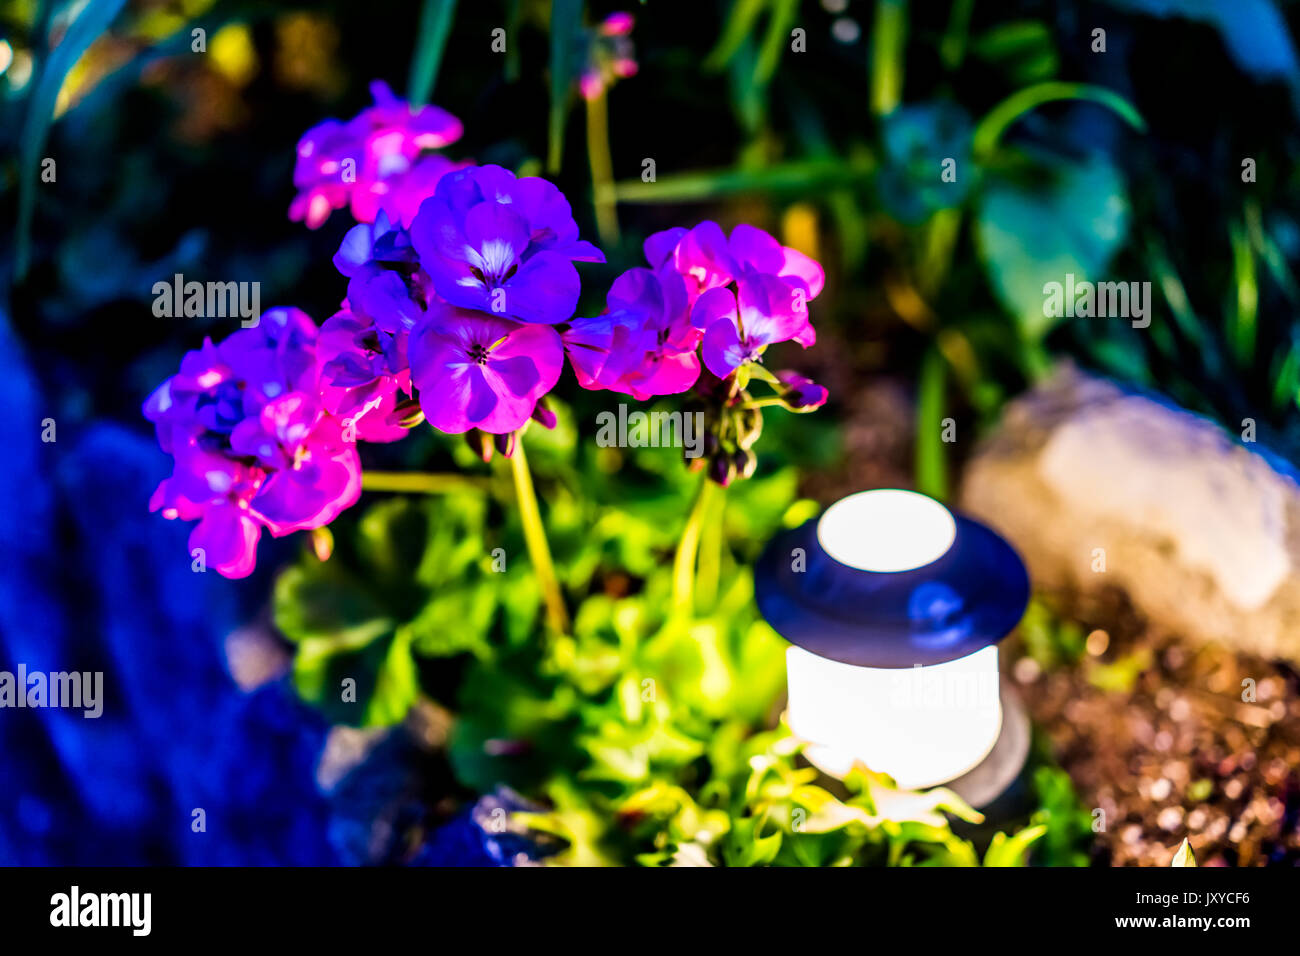 Illuminated lantern lamp at night by pink geranium pelargonium flowers in garden Stock Photo